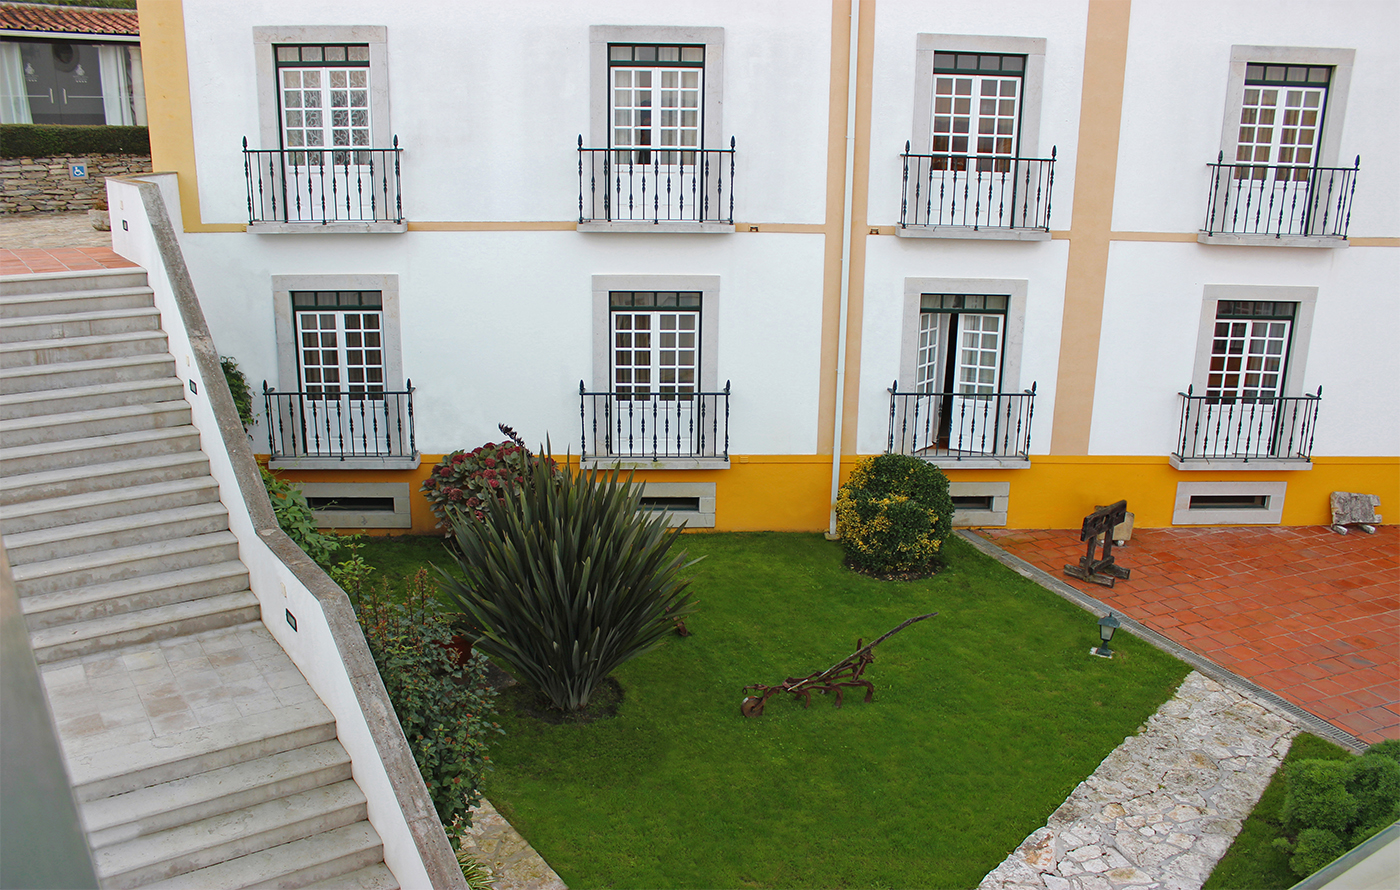 Hotel Real D'Óbidos